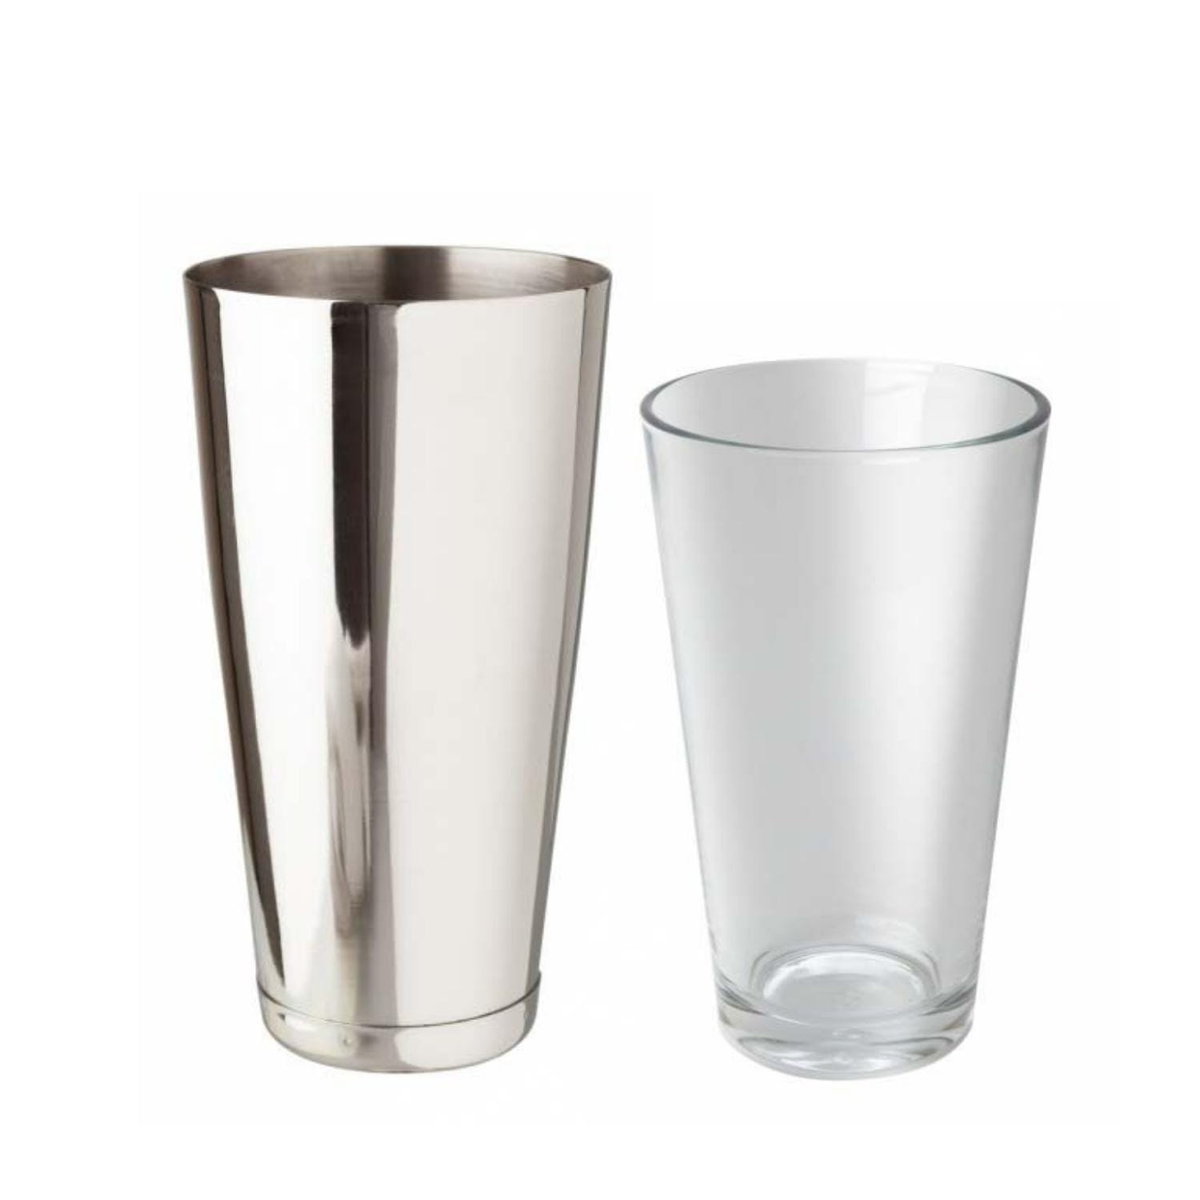 Shaker bostoński kubek i szklanica 840 i 470 ml